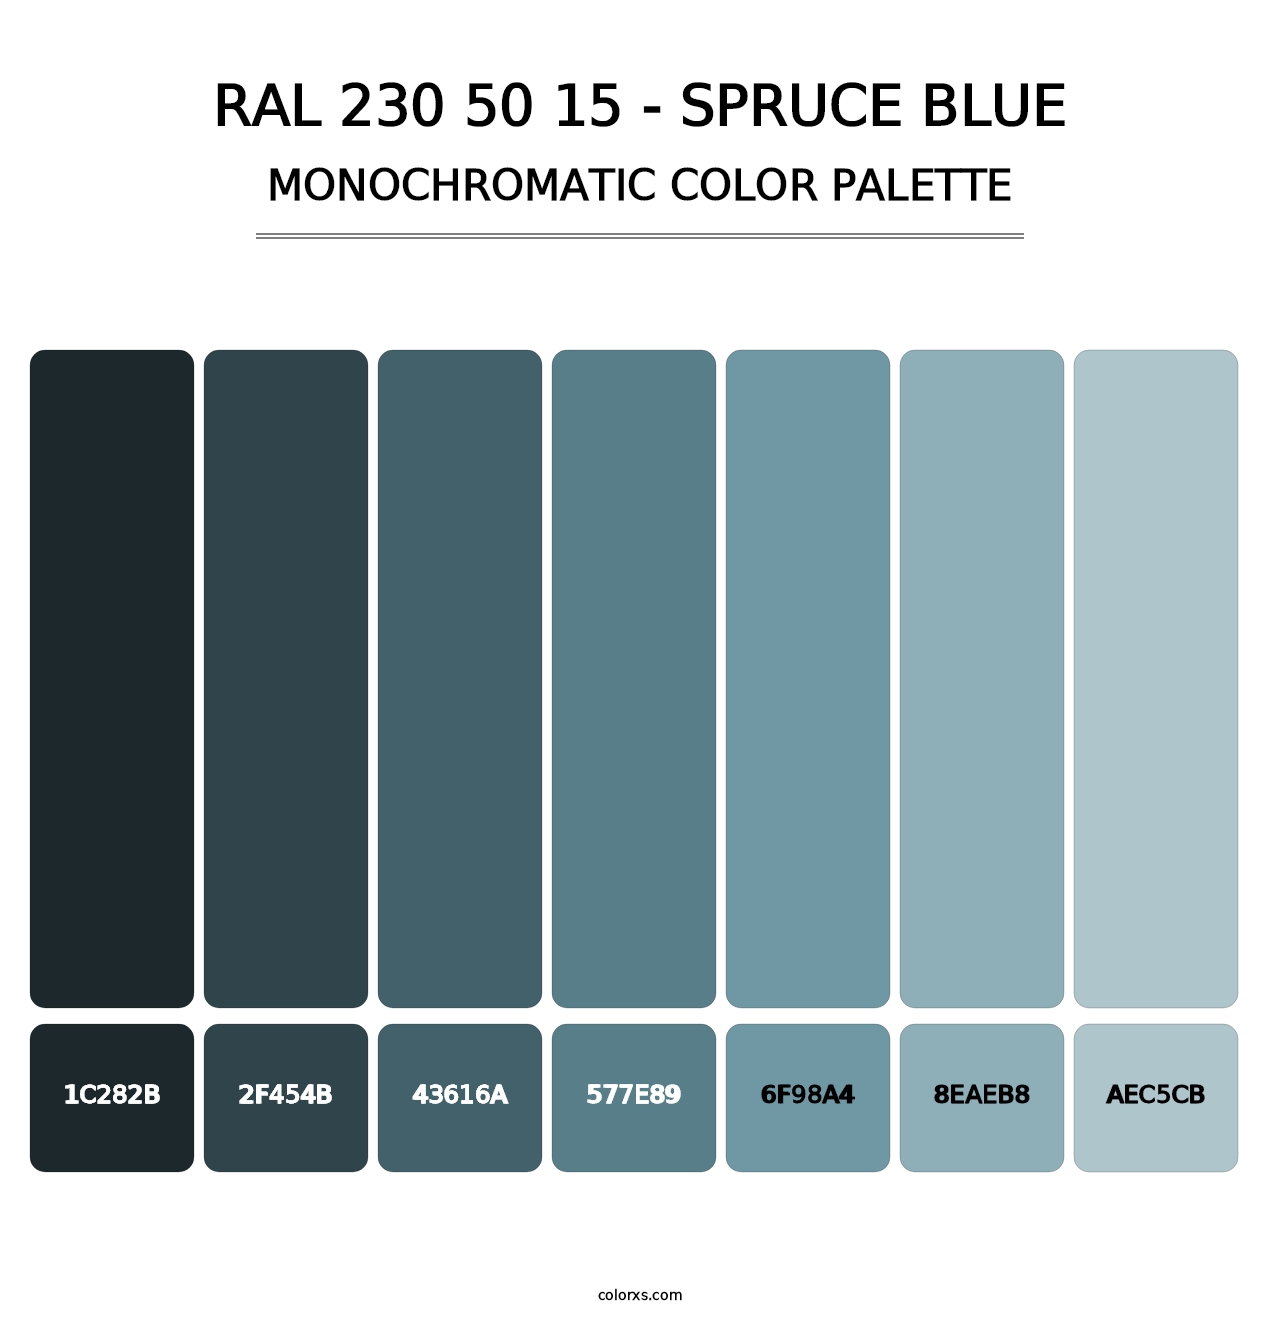 RAL 230 50 15 - Spruce Blue - Monochromatic Color Palette